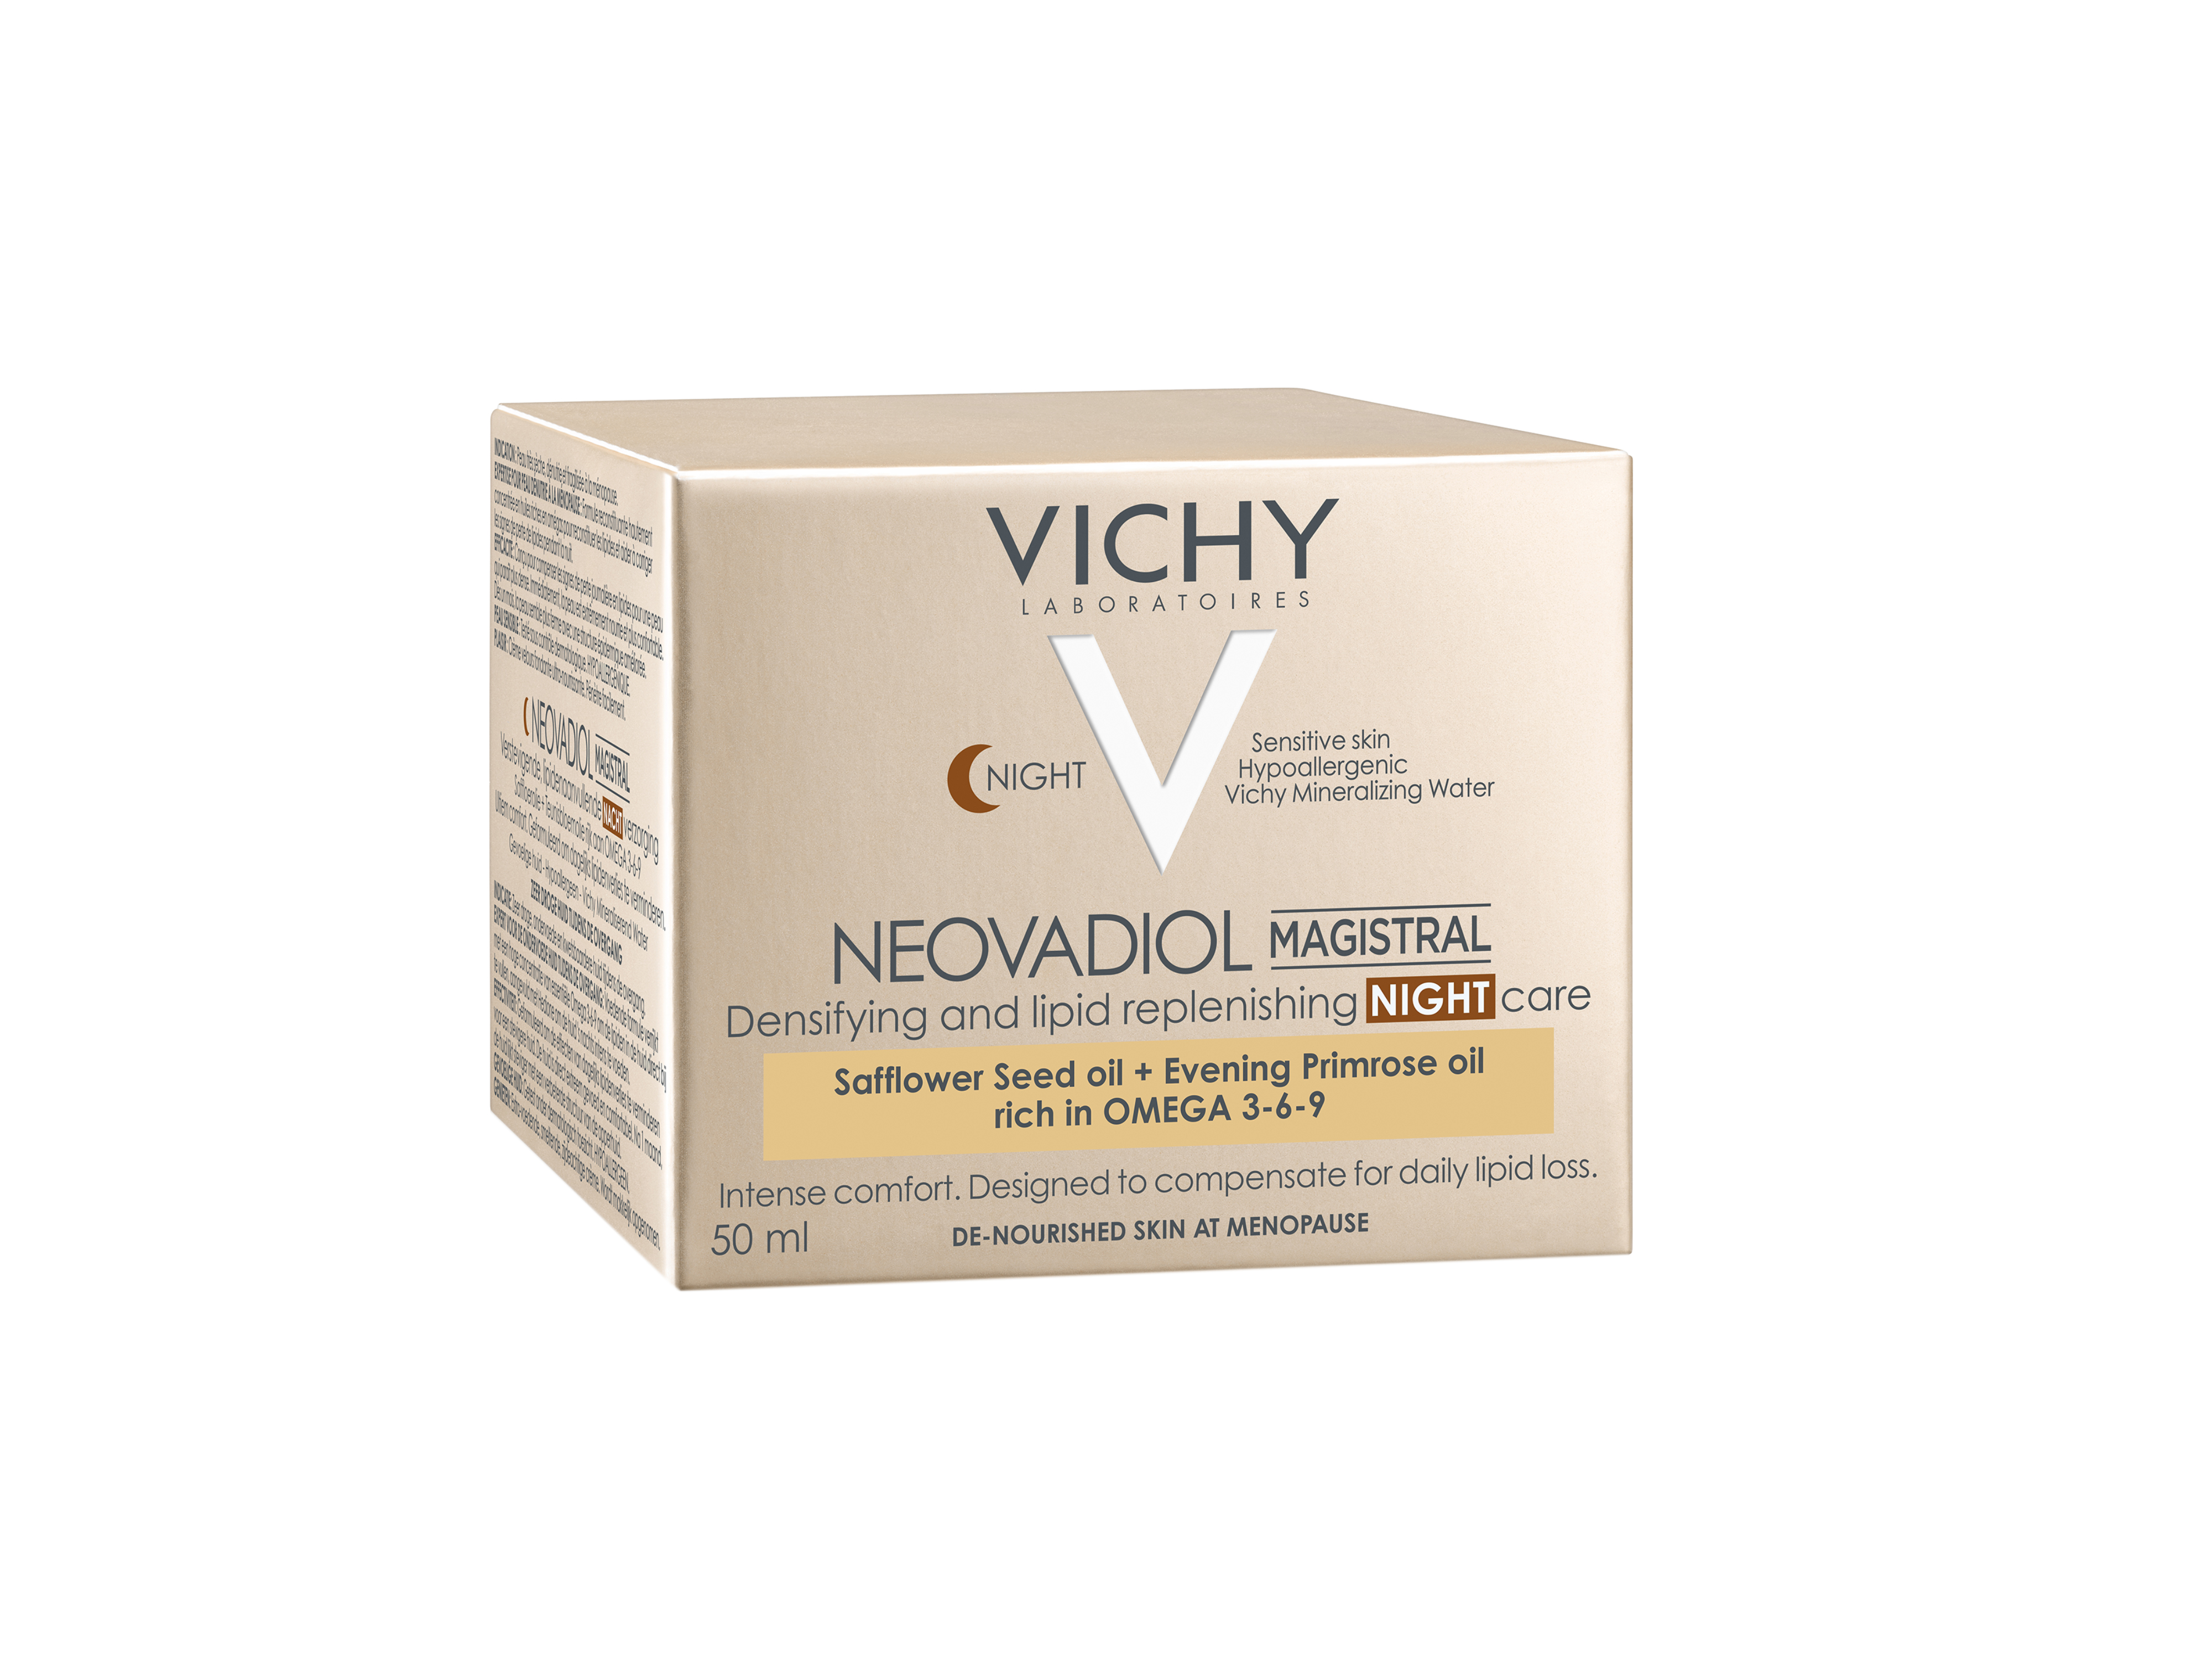 Vichy Vichy Neovadiol Magistral Night, 50 ml